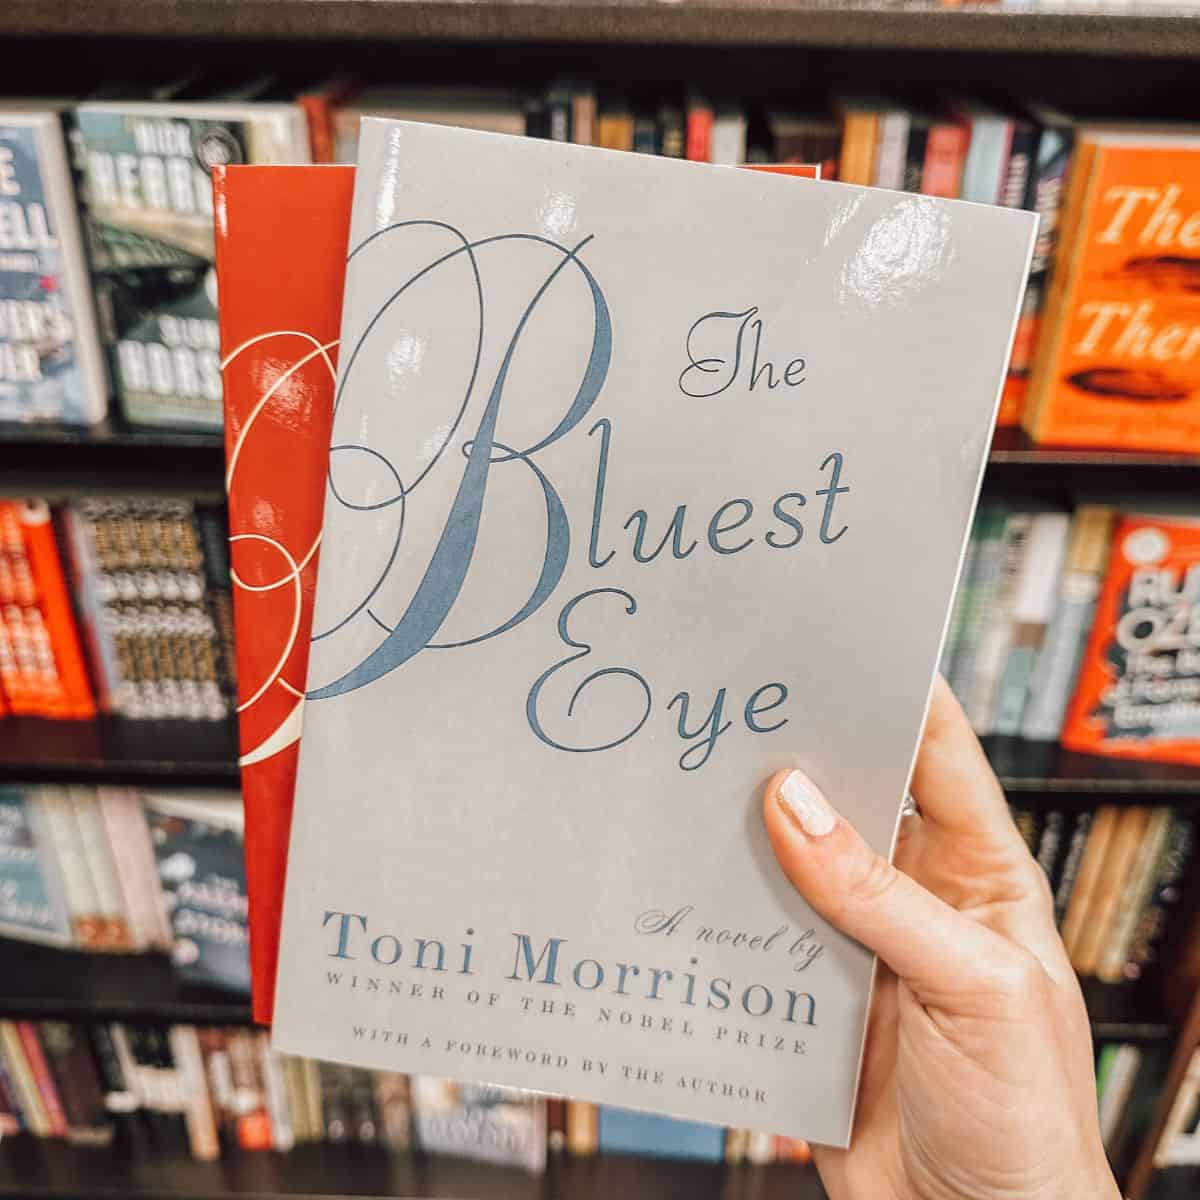 The Bluest Eye by Toni Morrison in front of a bookshelf.